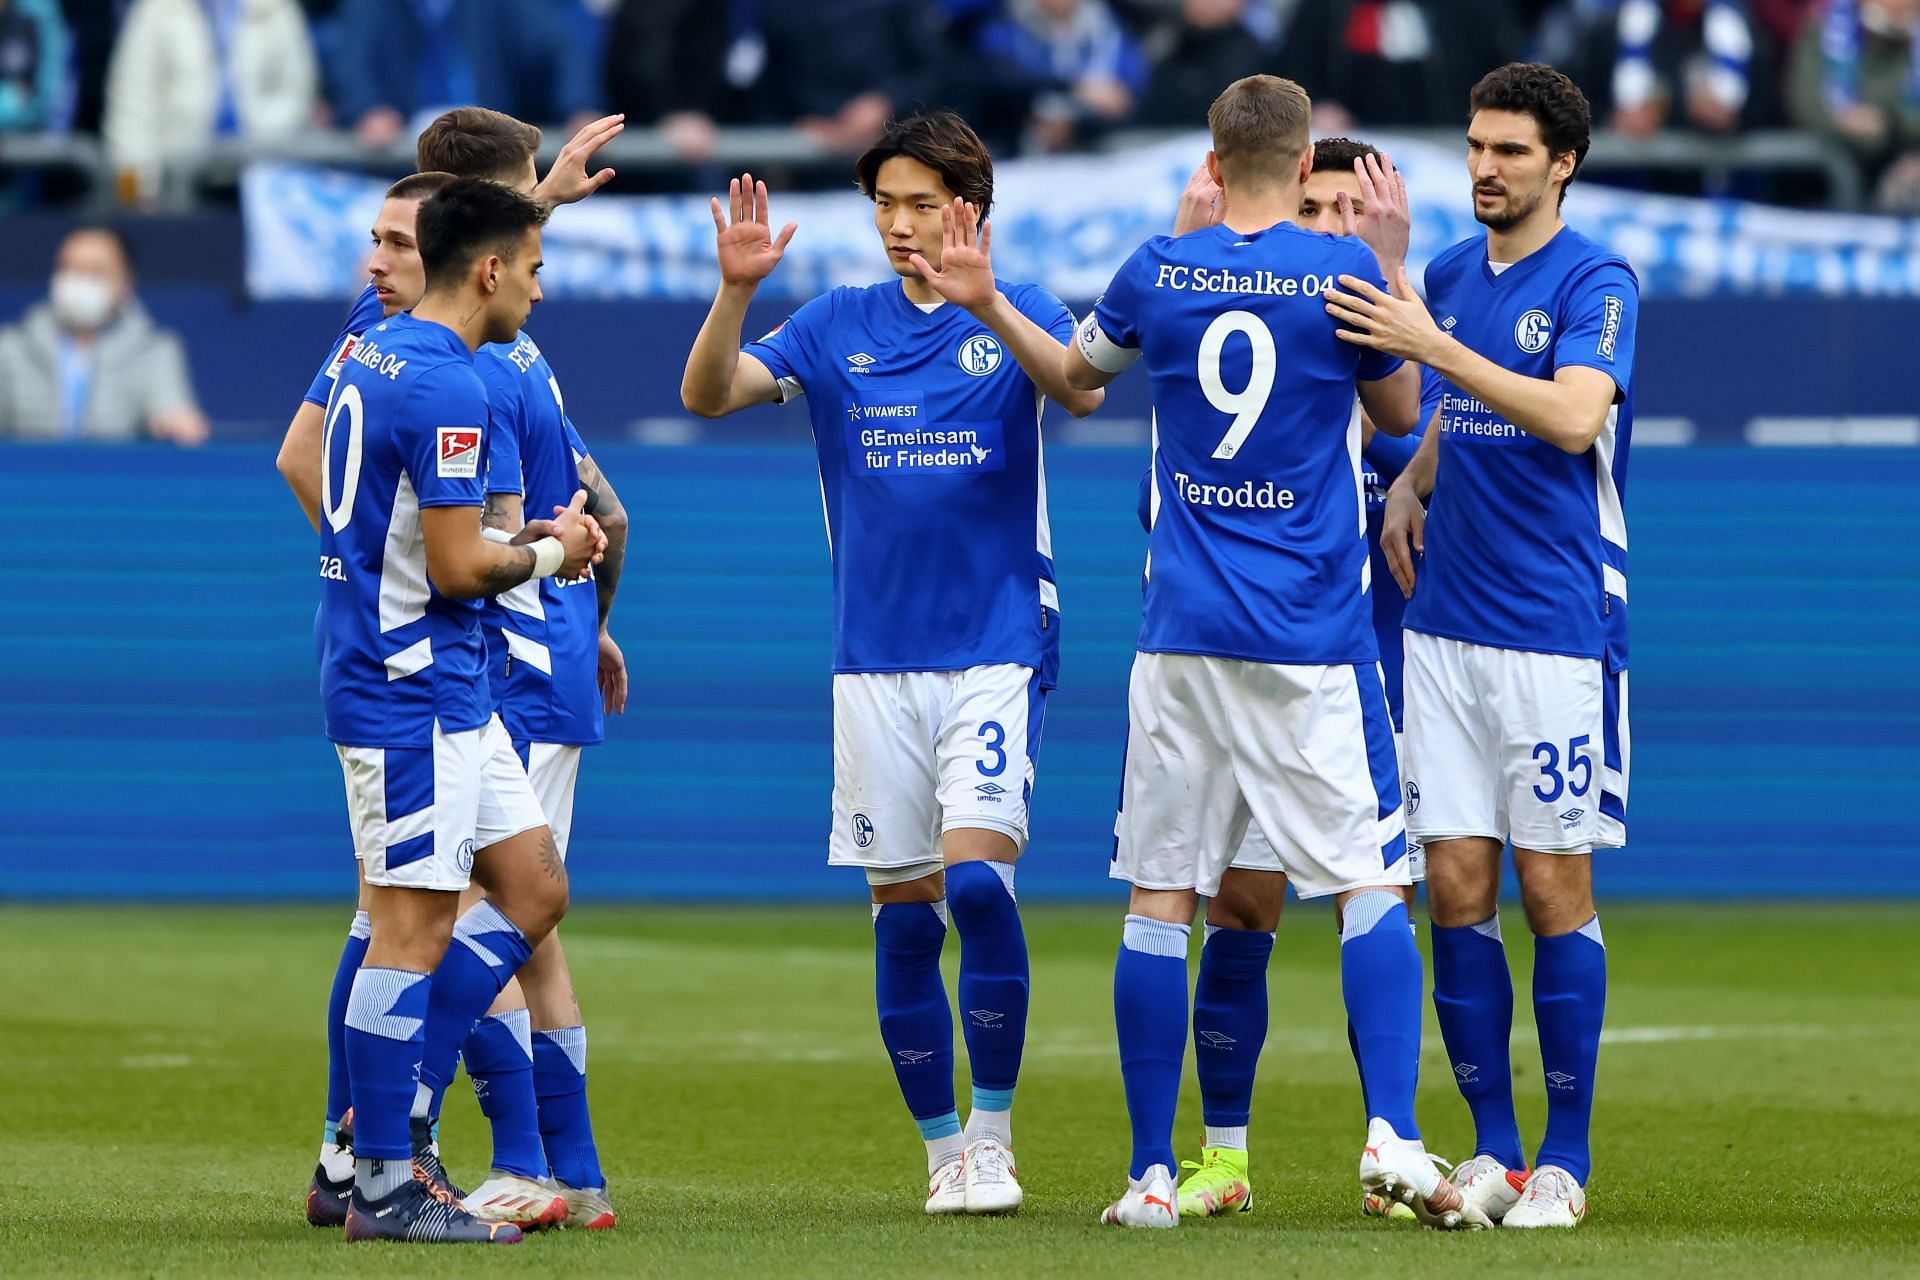 Schalke host Hannover in their upcoming 2. Bundesliga fixture on Saturday